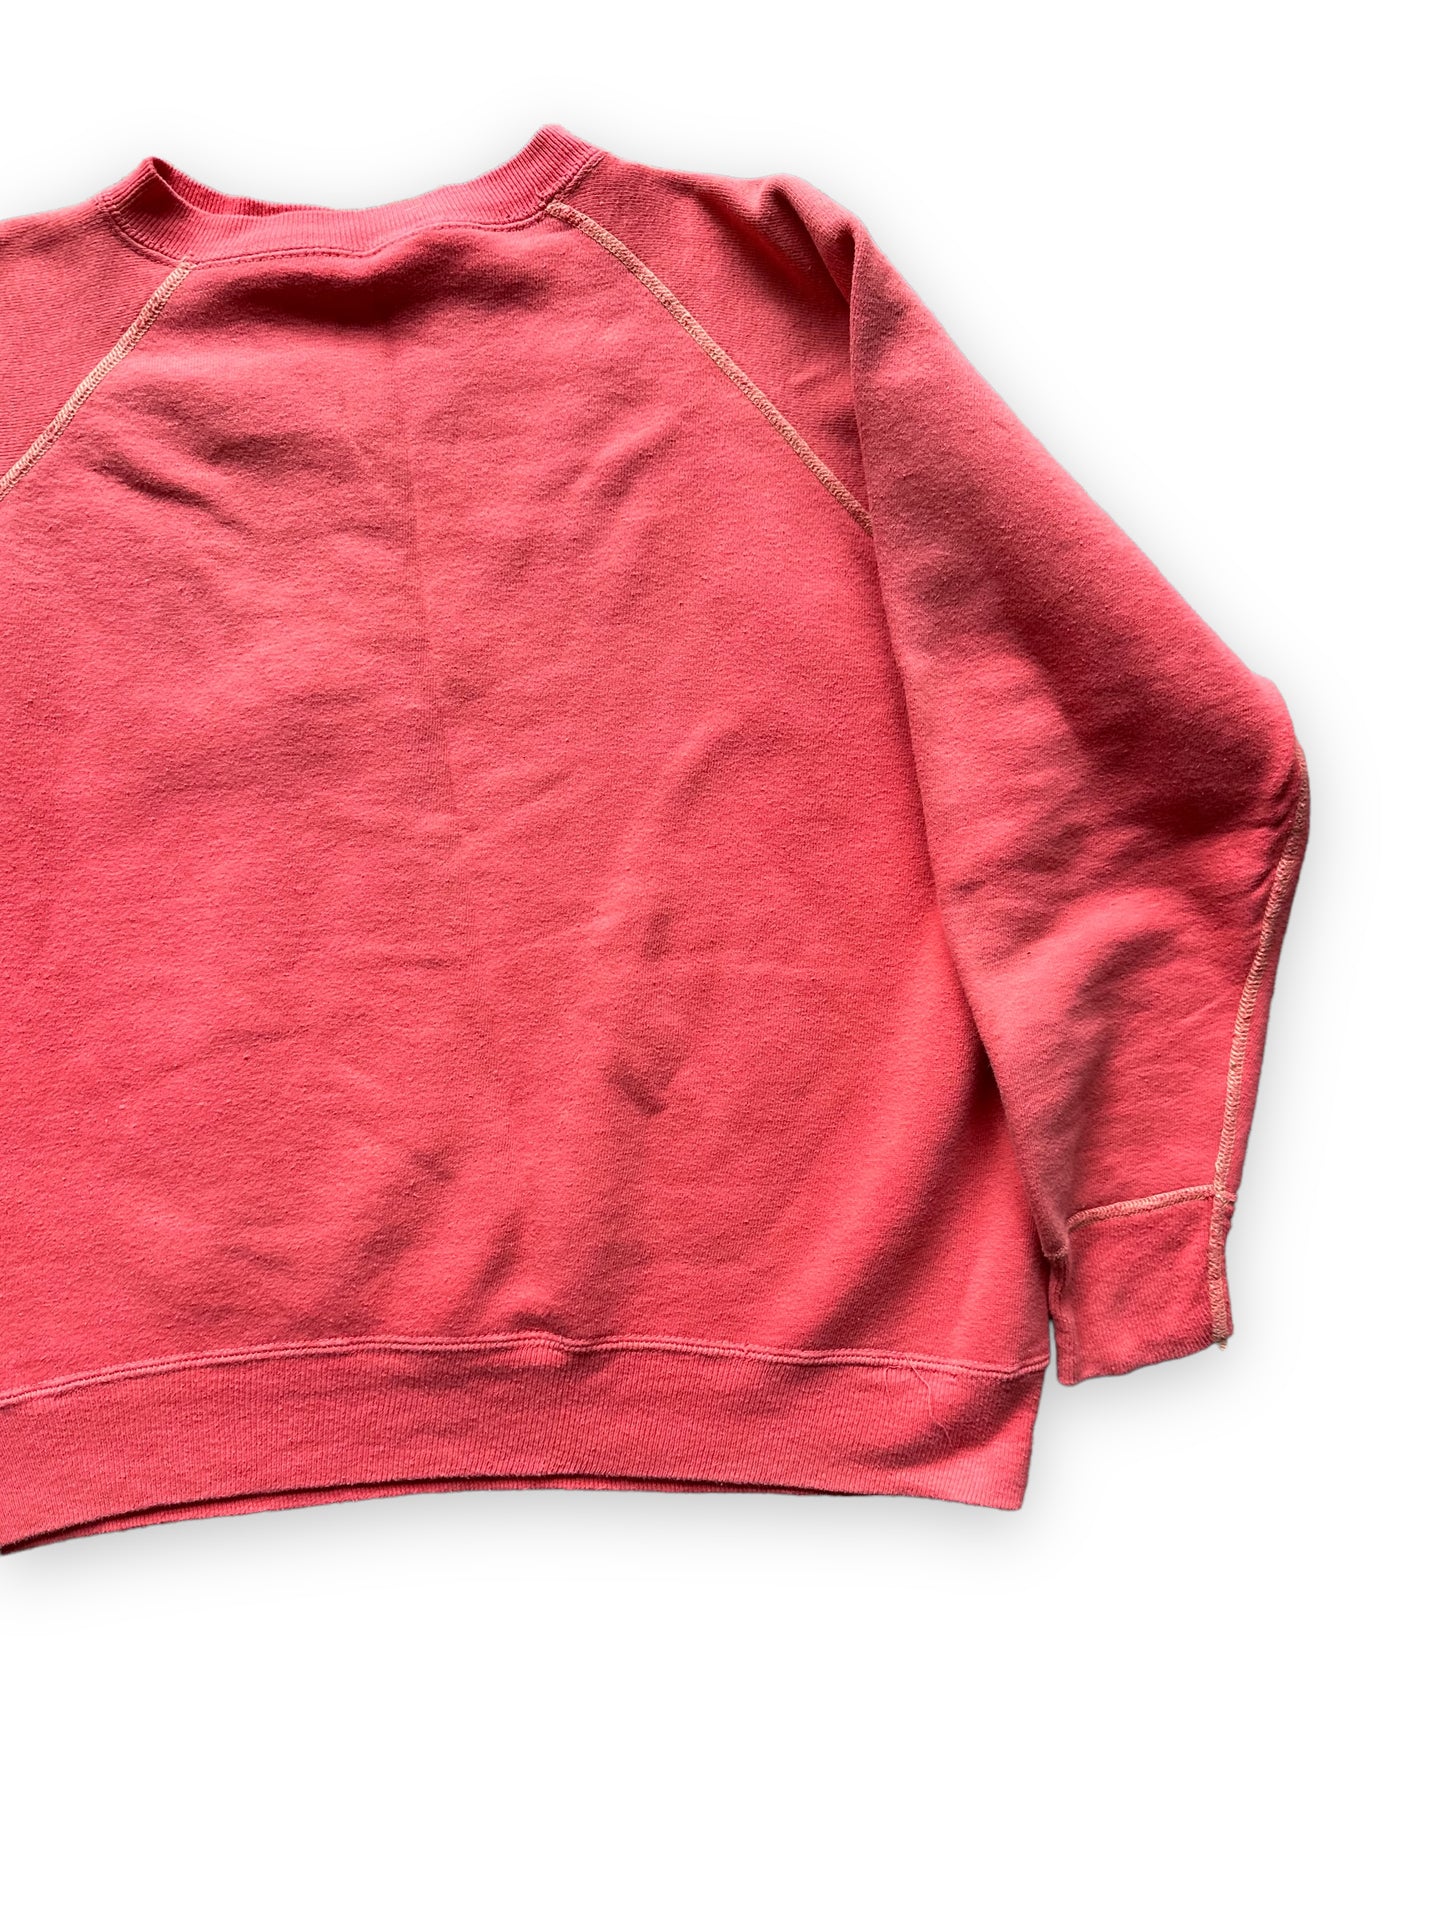 Left Side View of Vintage Faded Red Crewneck Sweatshirt | Vintage Crewneck Sweatshirt Seattle | Barn Owl Vintage Clothing